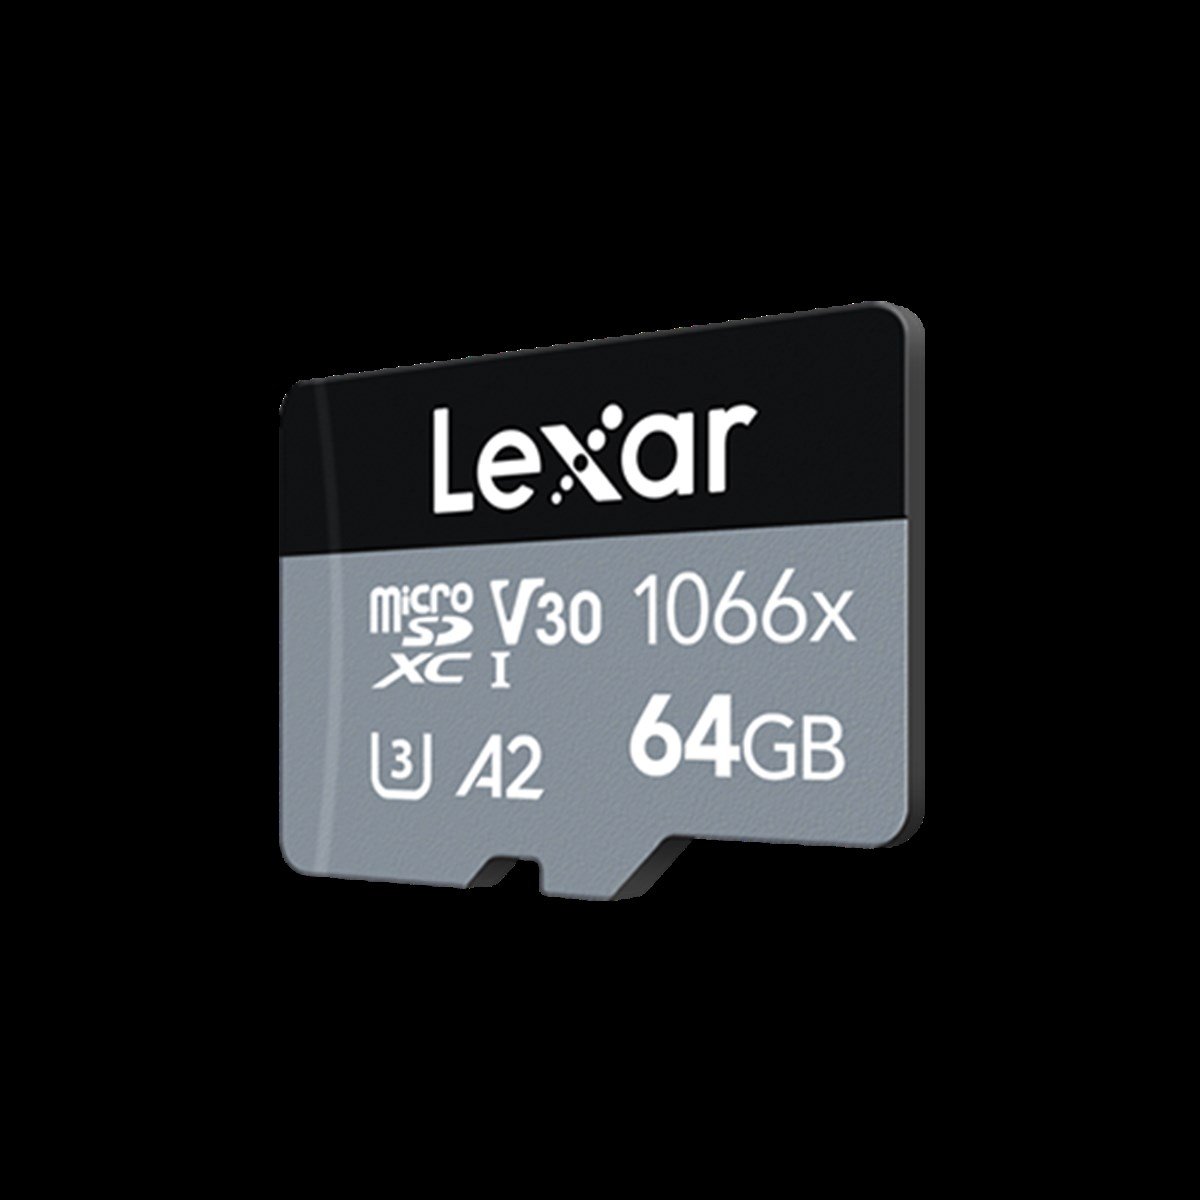 Lexar High-Performance 64GB 1066x microSDXC™ UHS-I